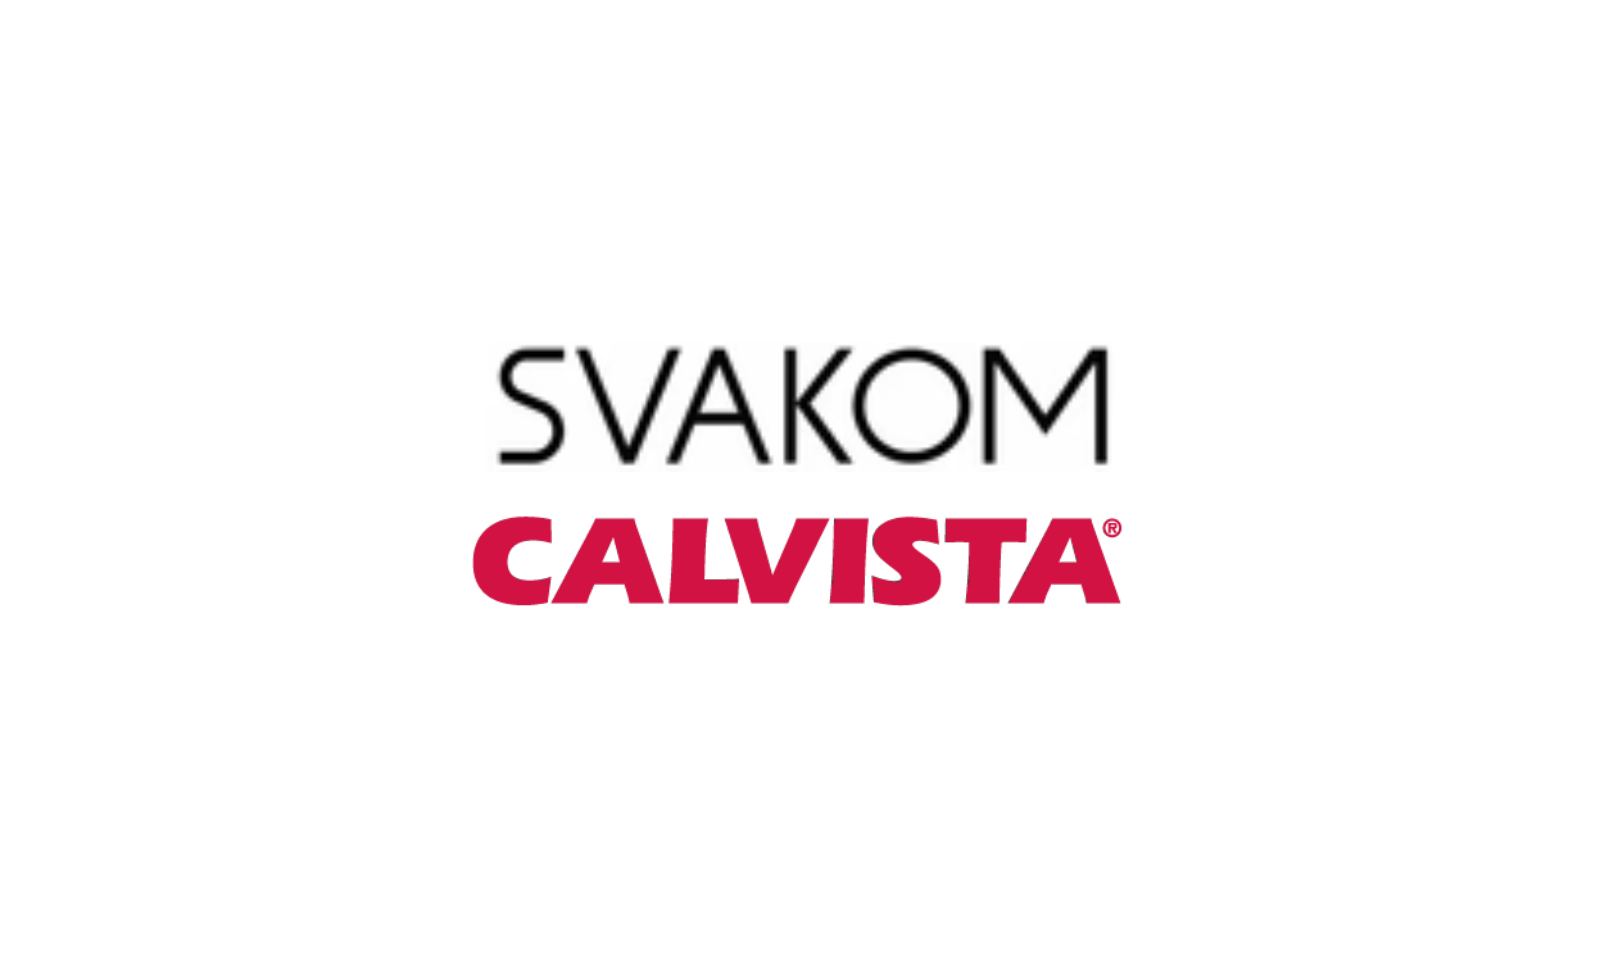 Svakom Signs With Calvista for Distribution in Australia